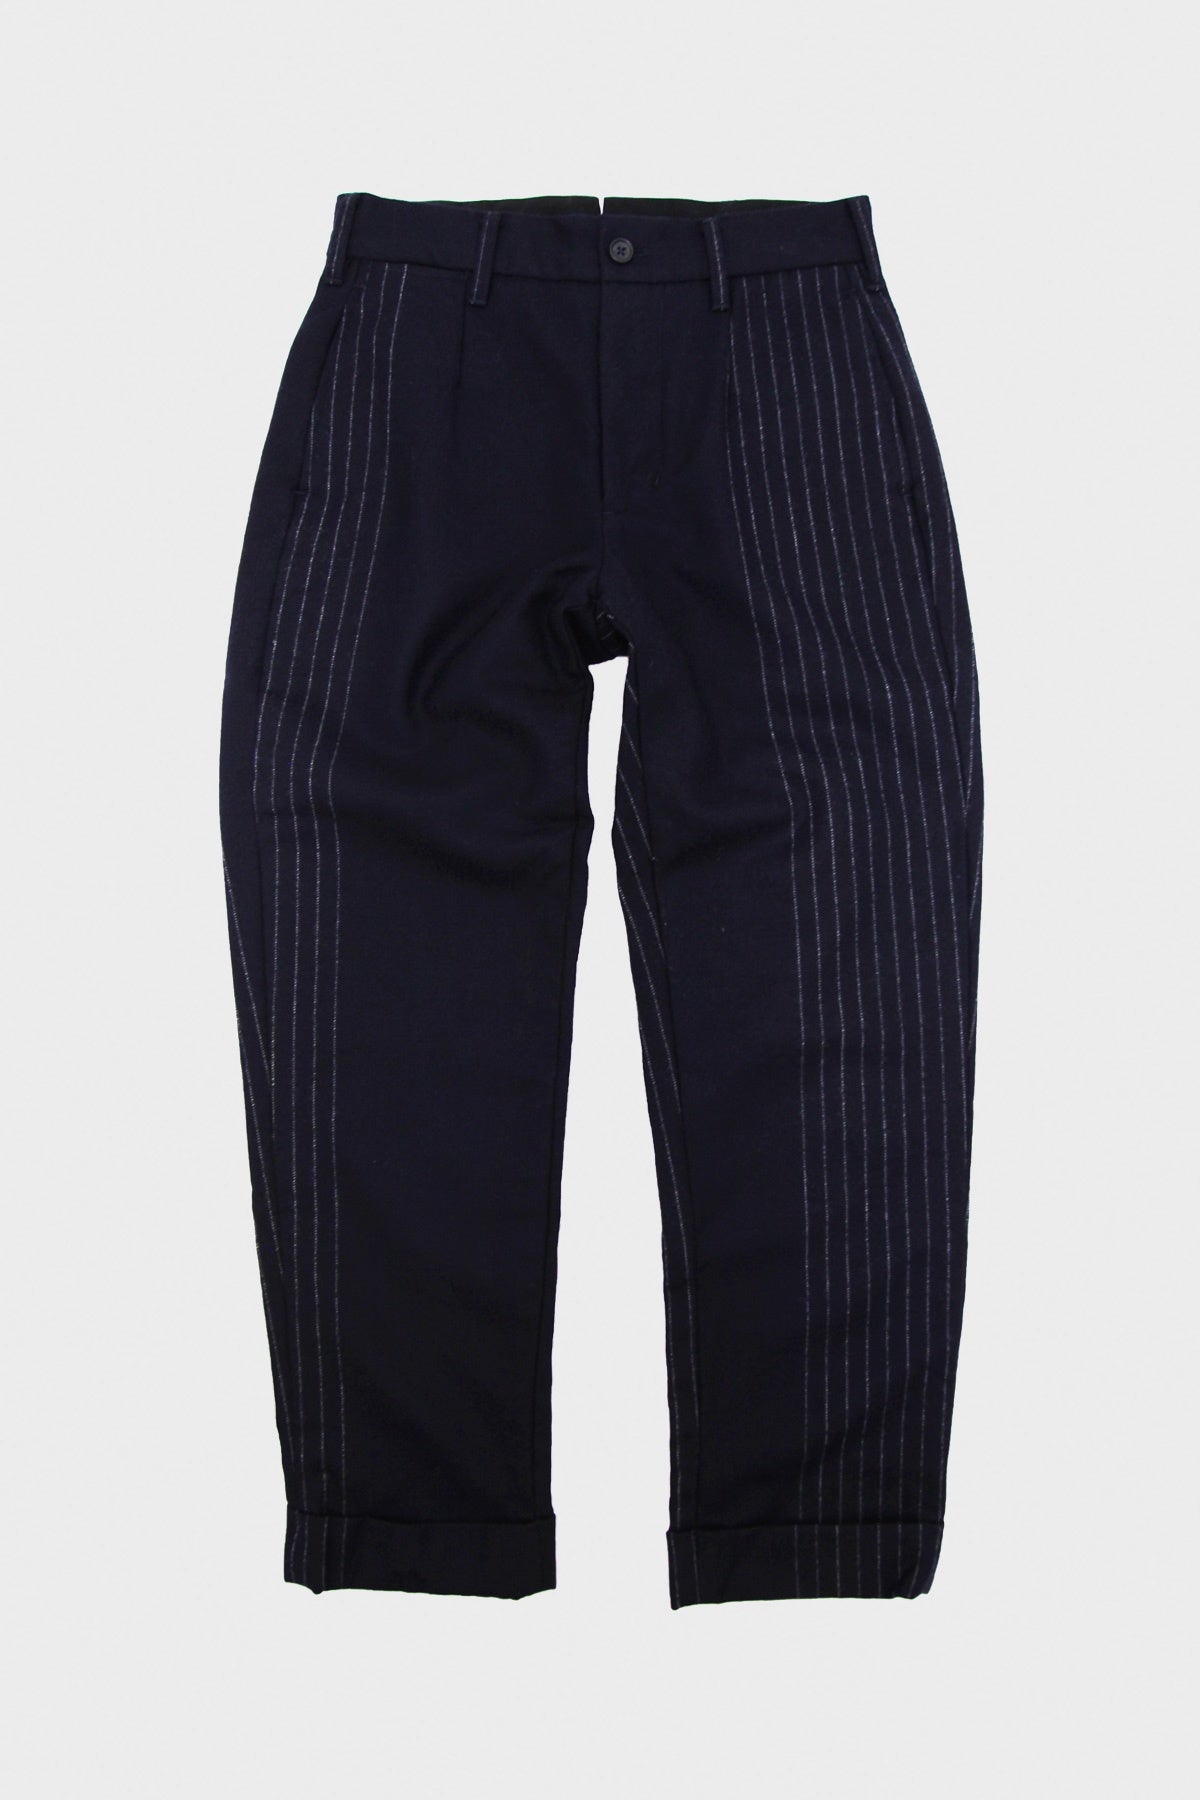 Engineered Garments - Andover Pant - Dark Navy Wool Chalk Stripe - Canoe Club